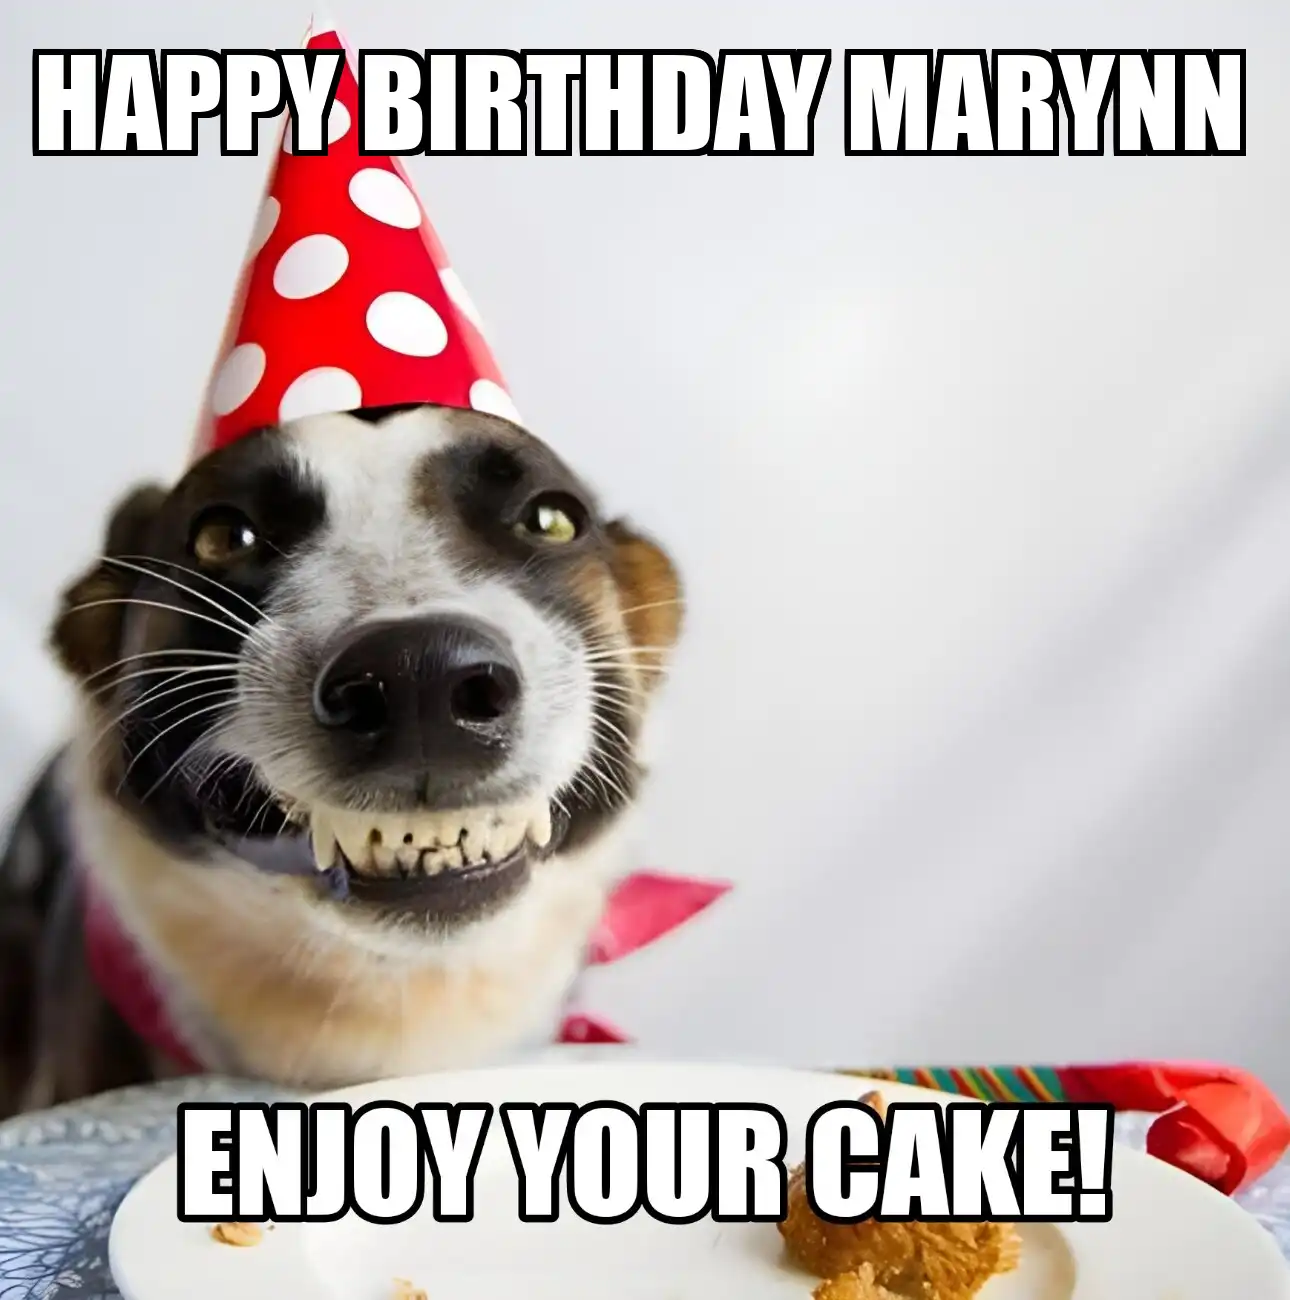 Happy Birthday Marynn Enjoy Your Cake Dog Meme